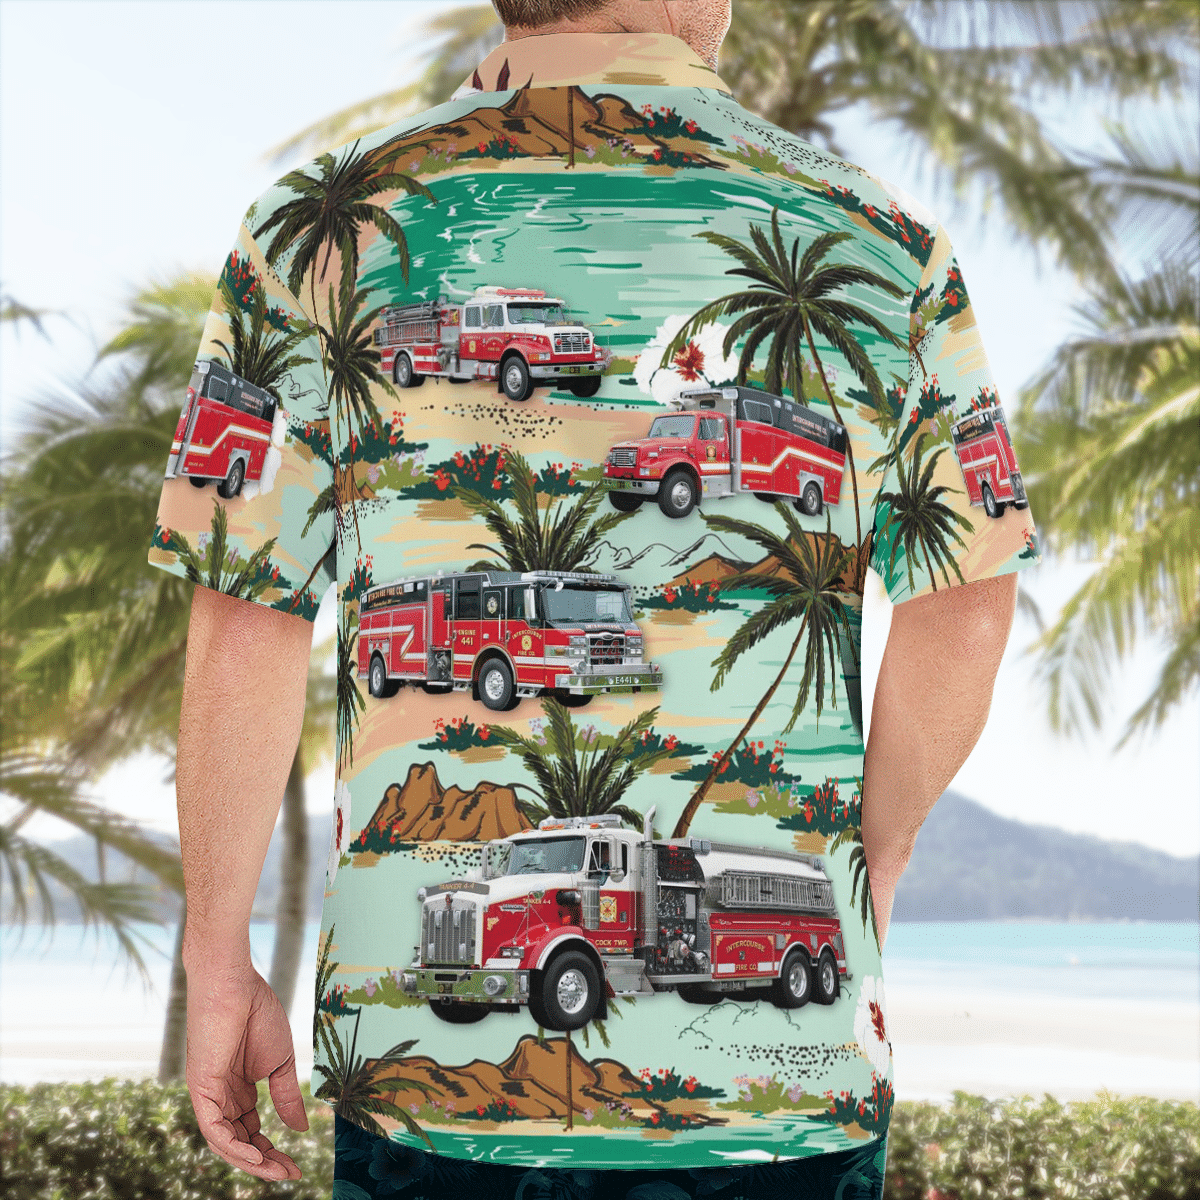 BEST Intercourse, Pennsylvania, Intercourse Fire Company 3D Aloha Shirt1